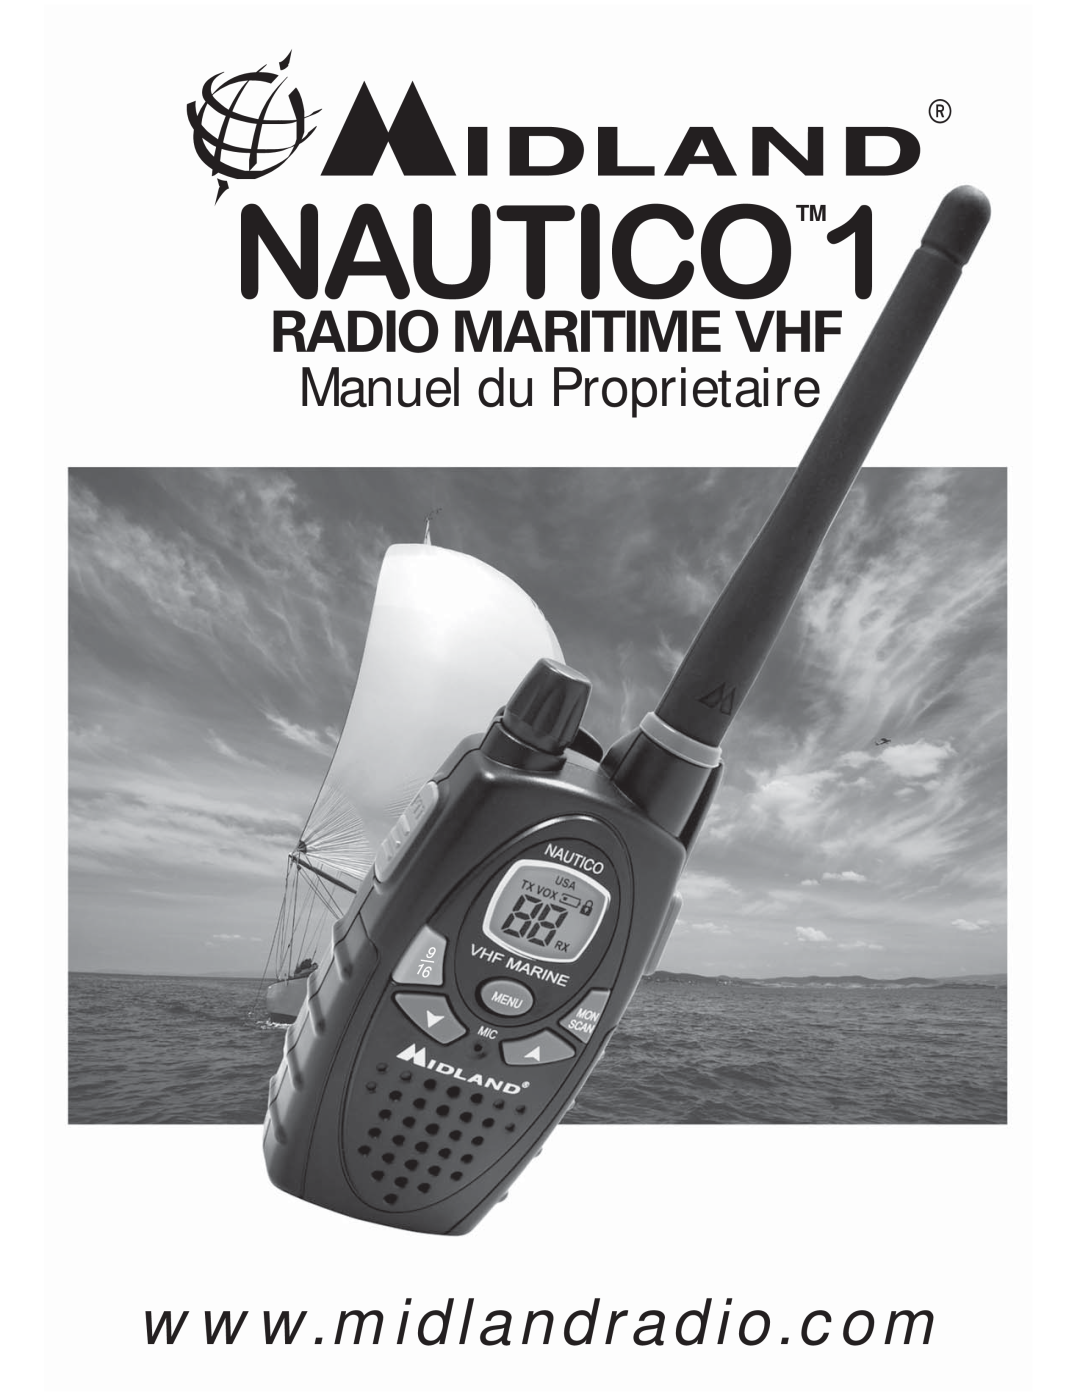 Midland Radio NT1 SERIES, NT1VP owner manual NAUTICOTM1, Manuel du Proprietaire, Radio Maritime Vhf 